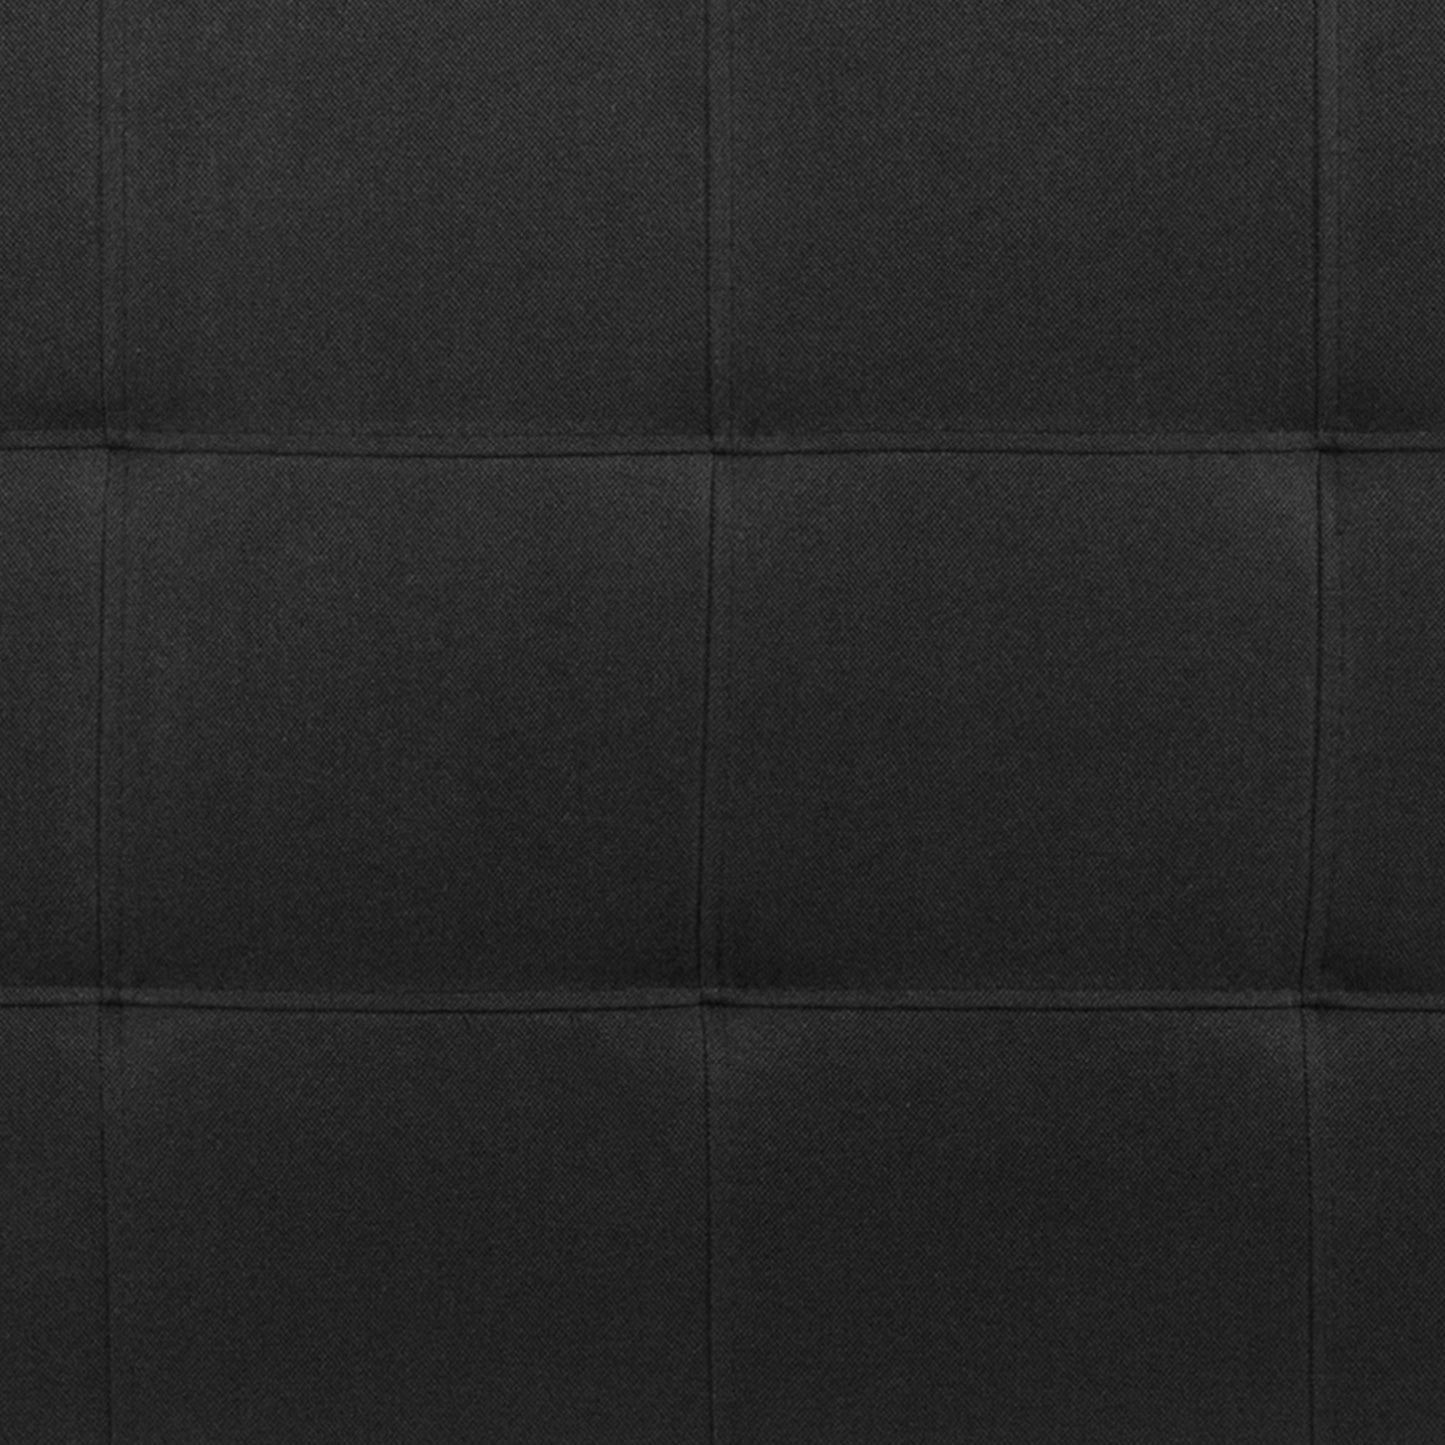 Queen Headboard-Black Fabric HG-HB1704-Q-BK-GG